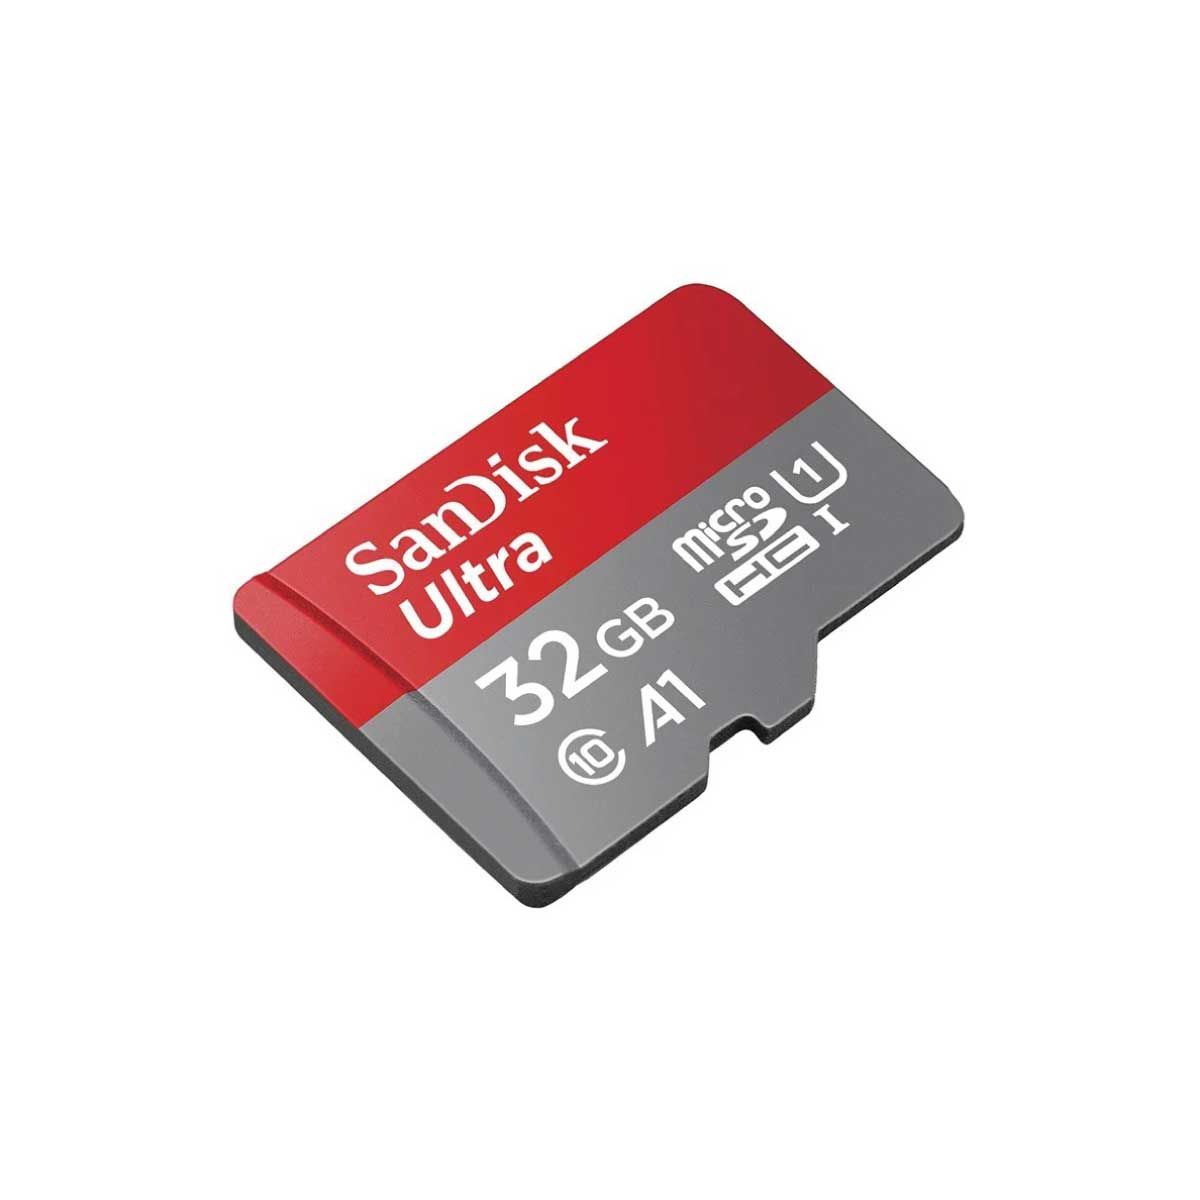 SANDISK MICRO SD CARD Ultra 32 GB รุ่น SDSQUA4032G_GN6MN